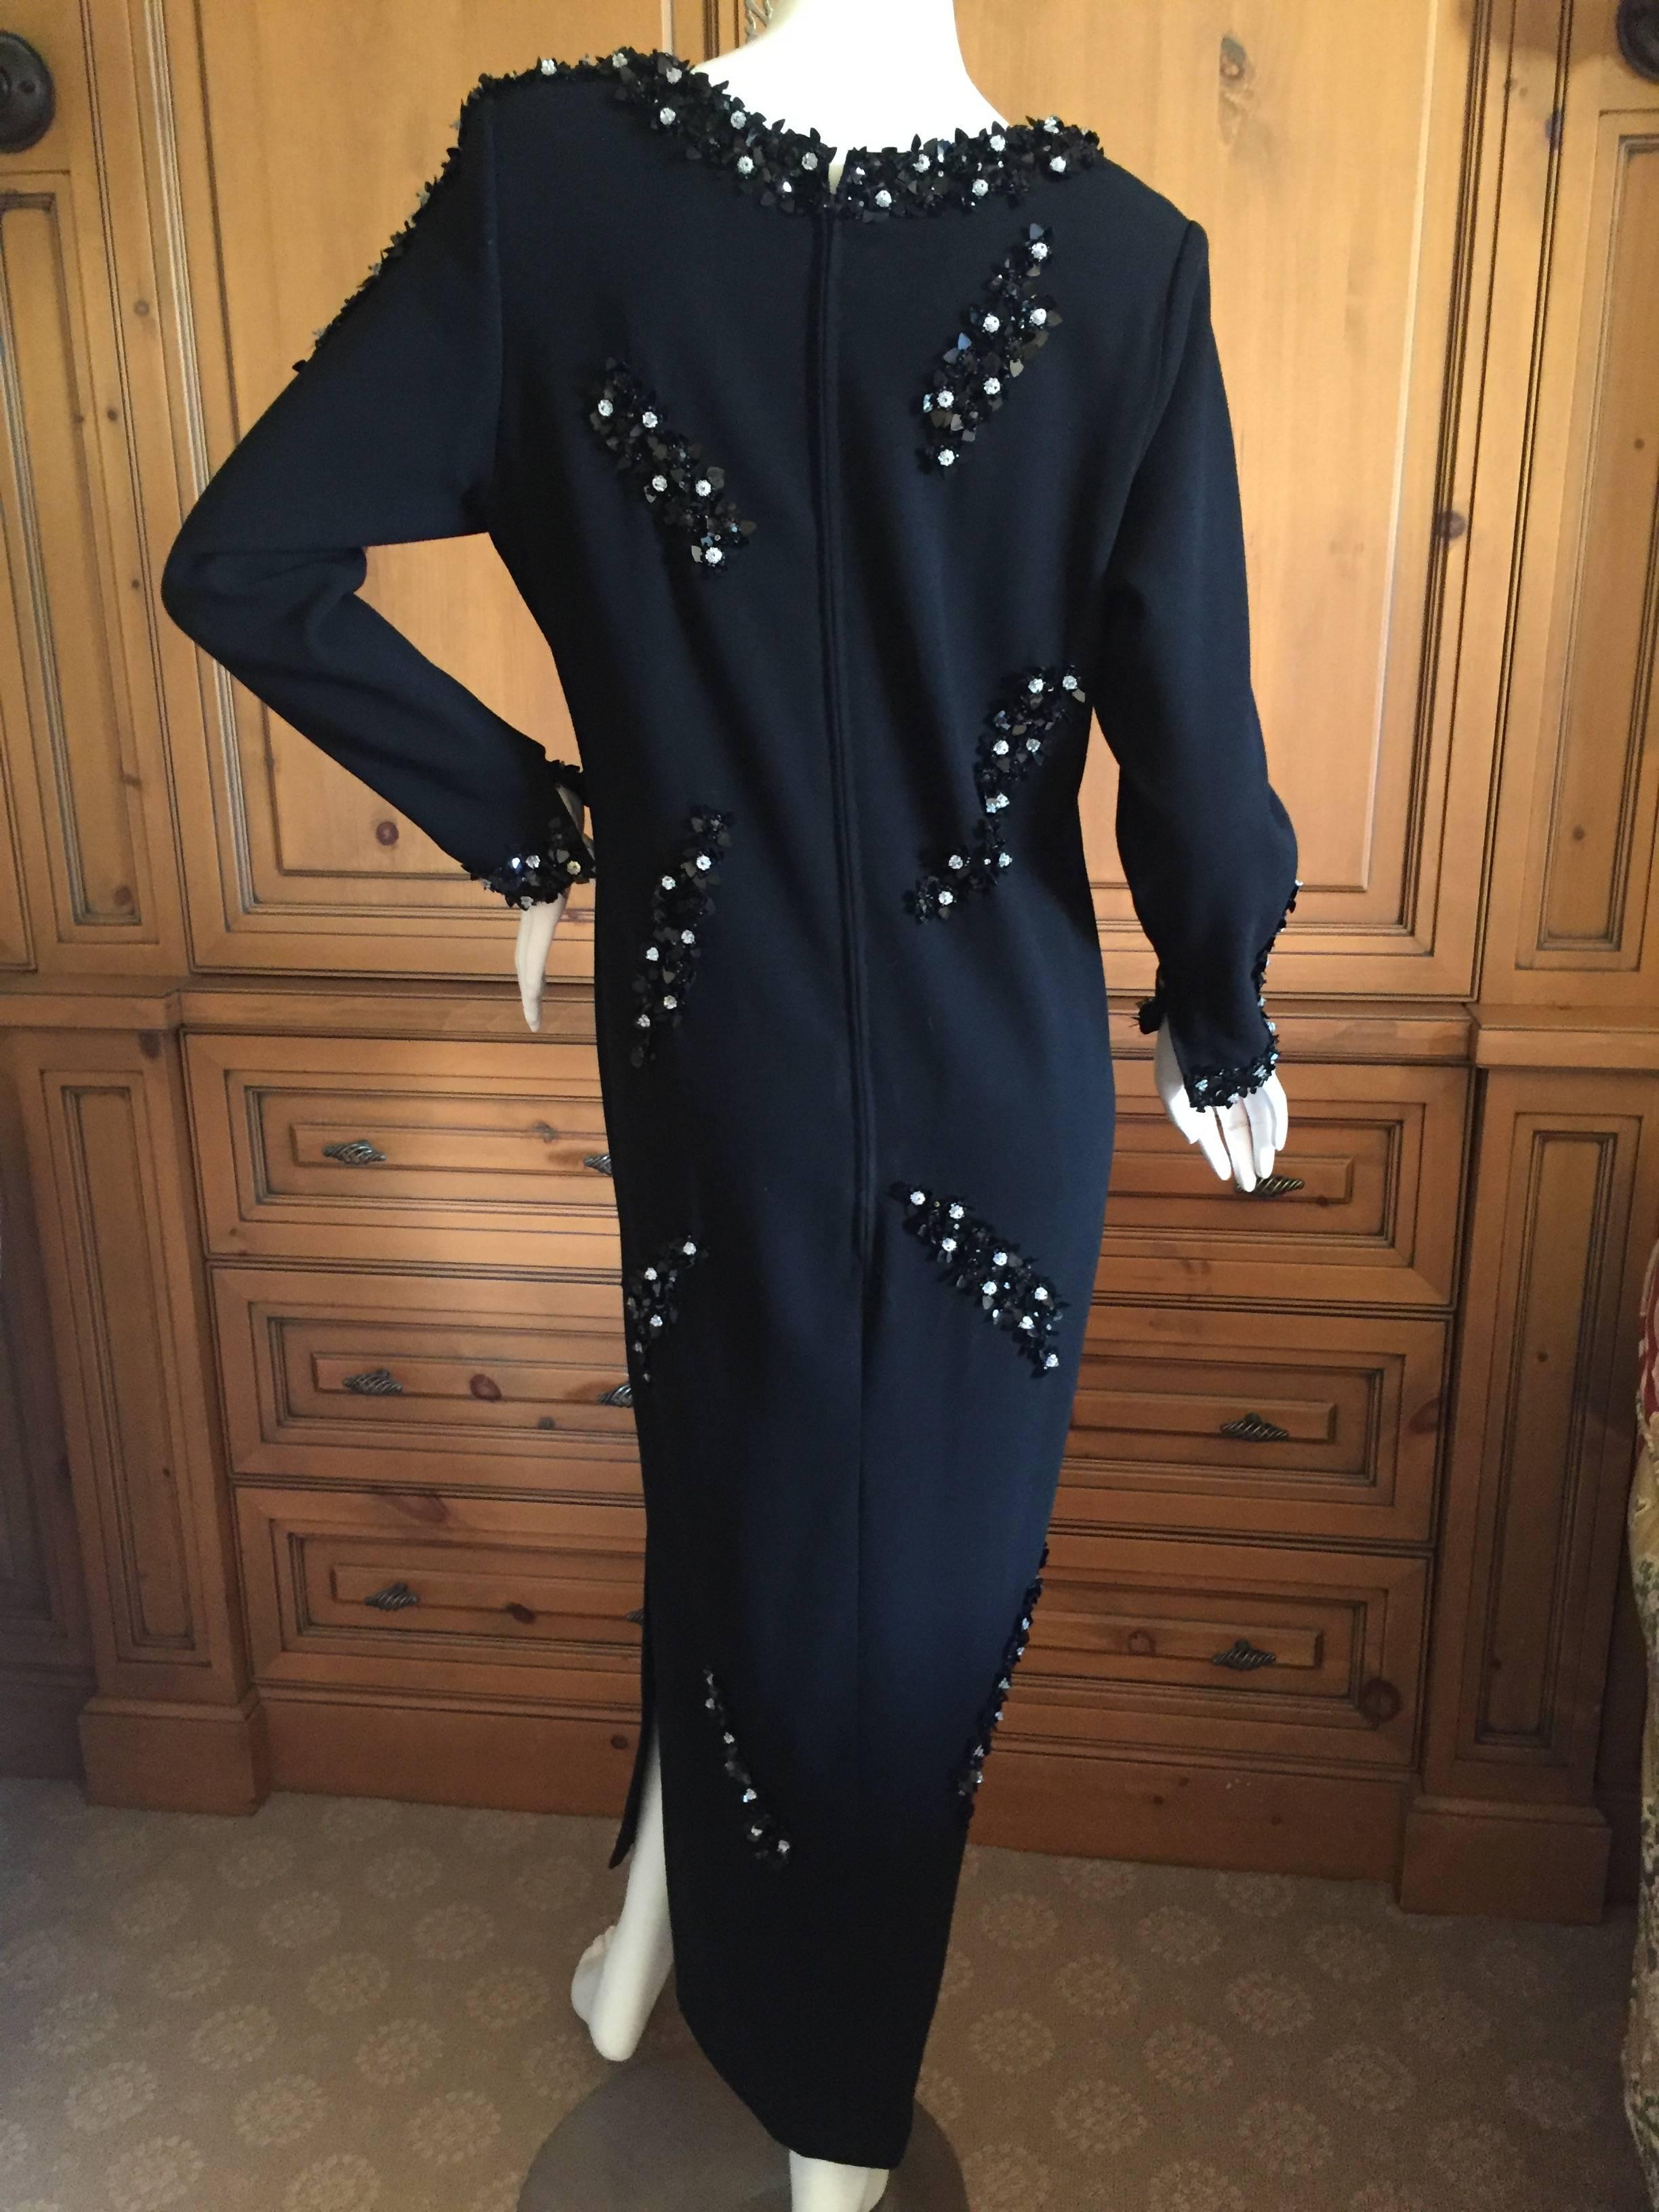 Galanos Black Bejeweled Evening Dress New w Tags Unworn Size 10 3